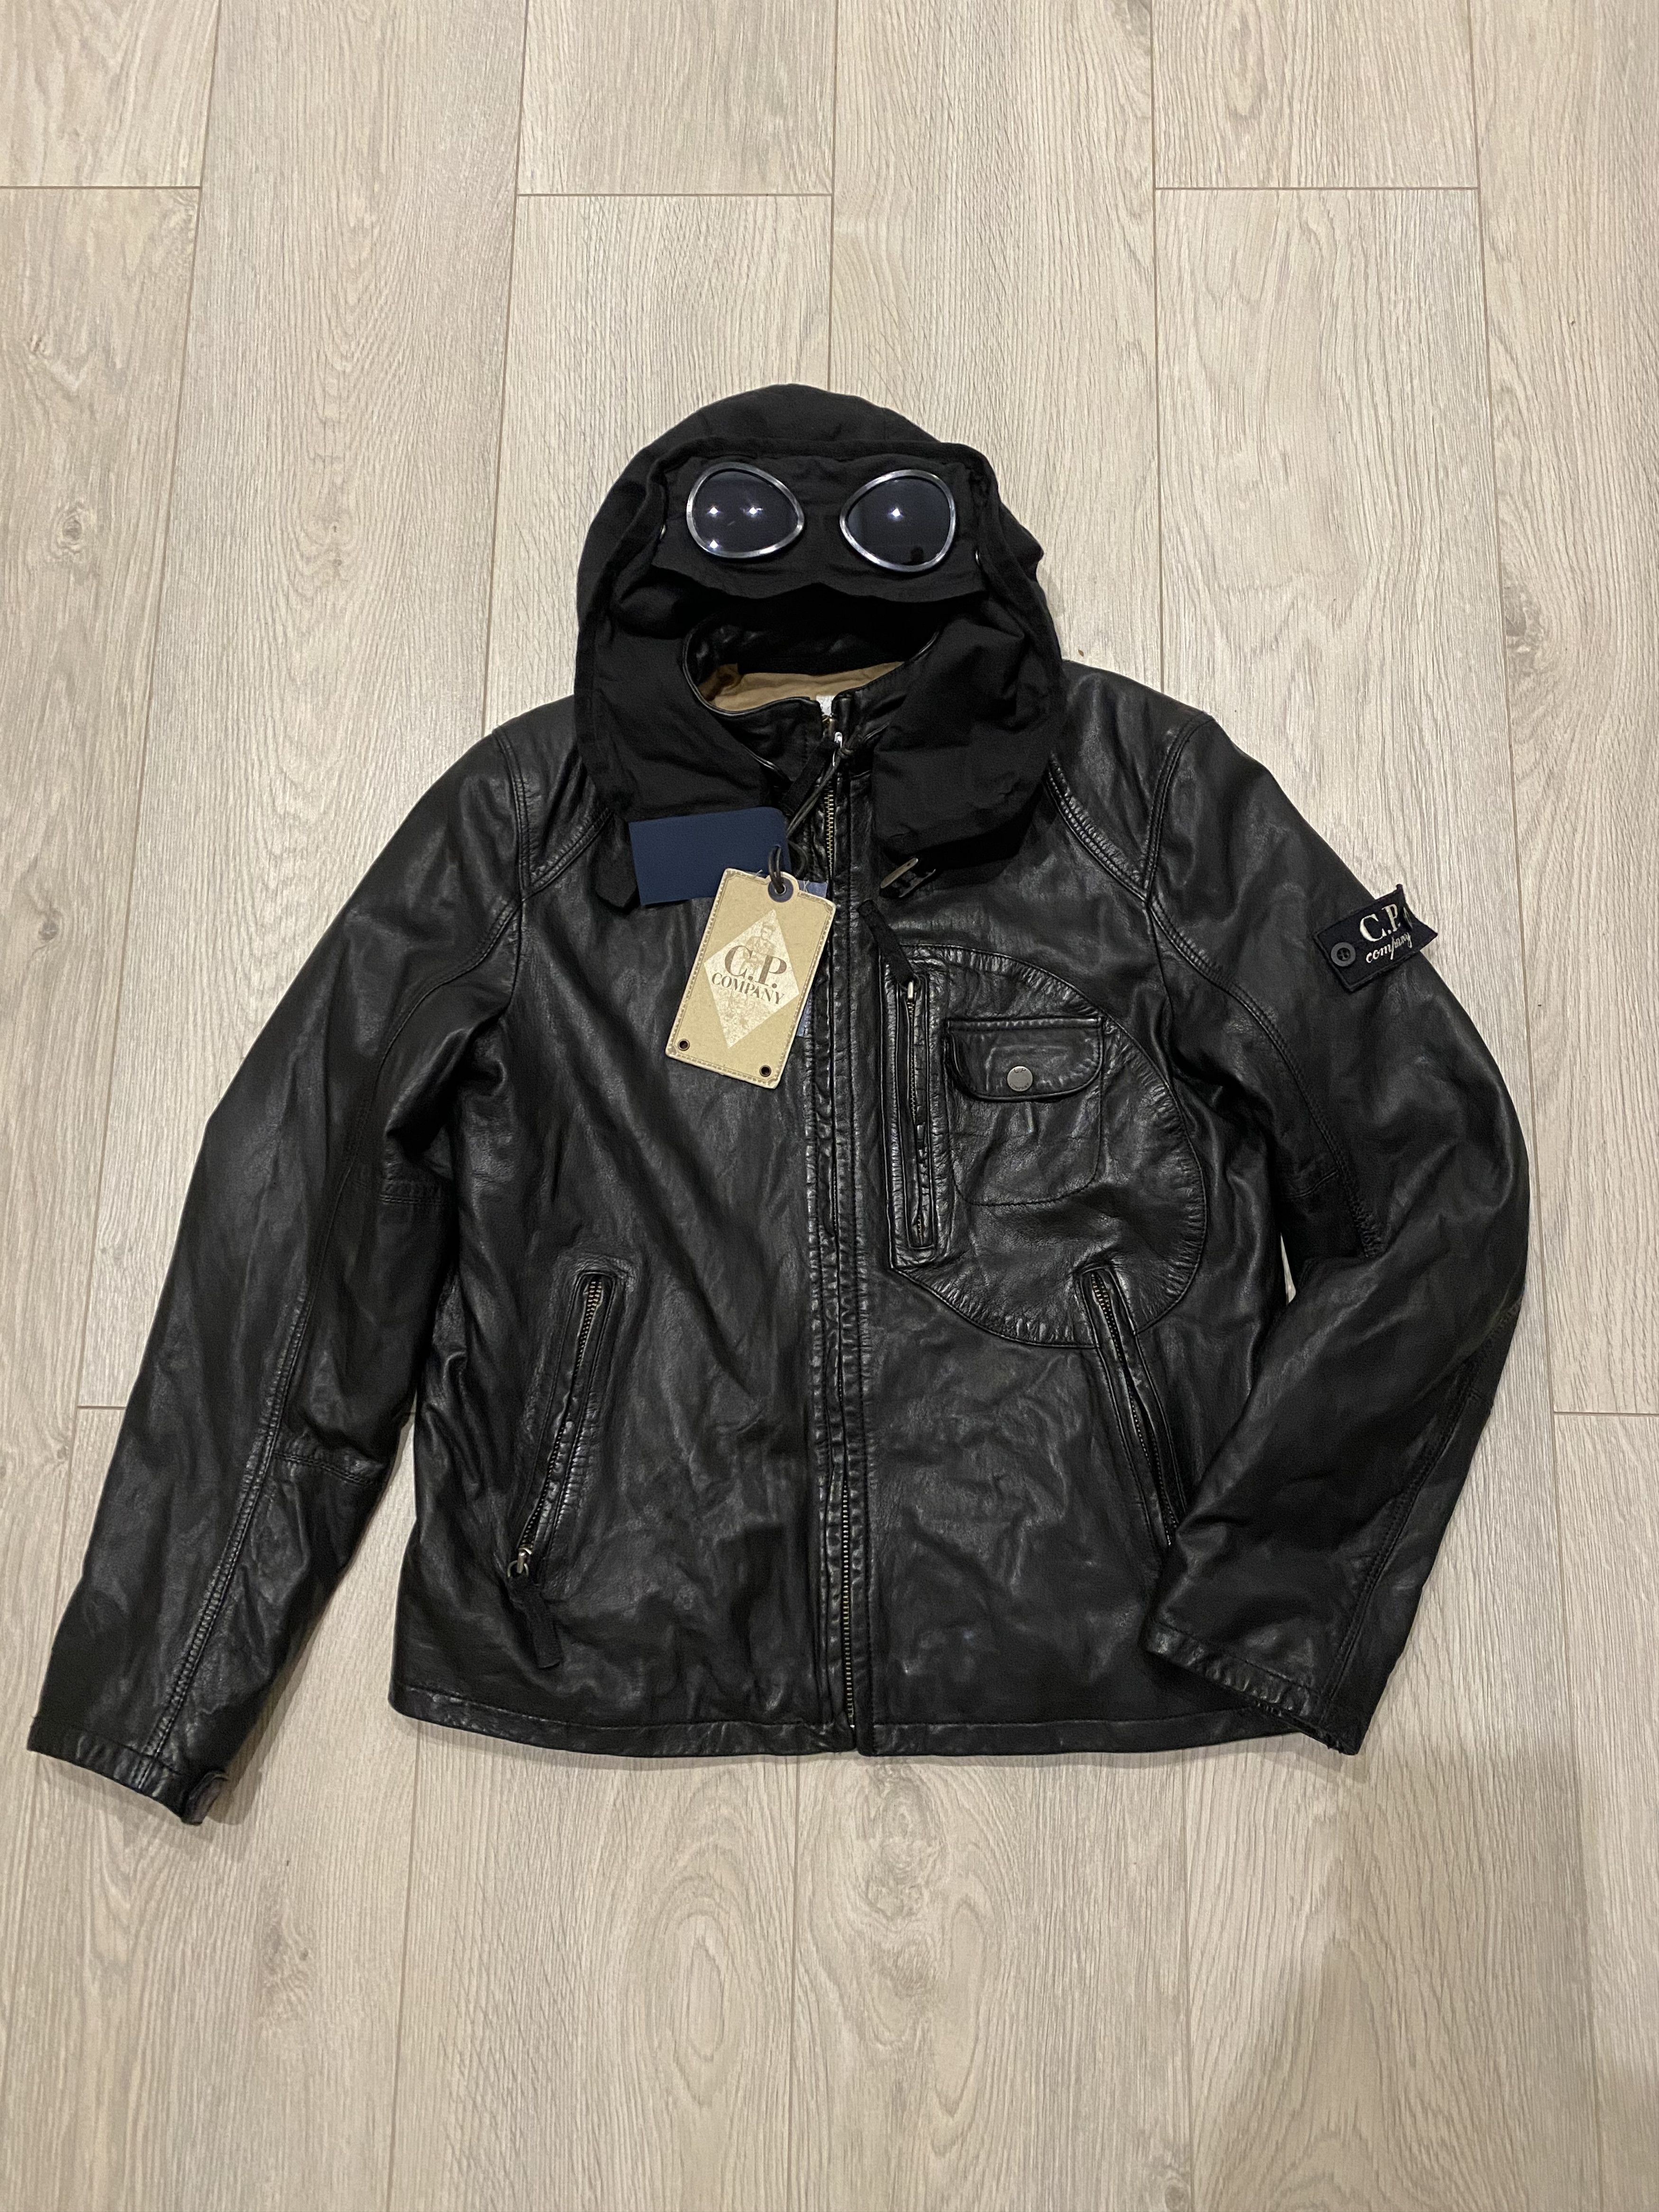 C.P. Company C.P. Company Junior Leather Mille Miglia jacket Size